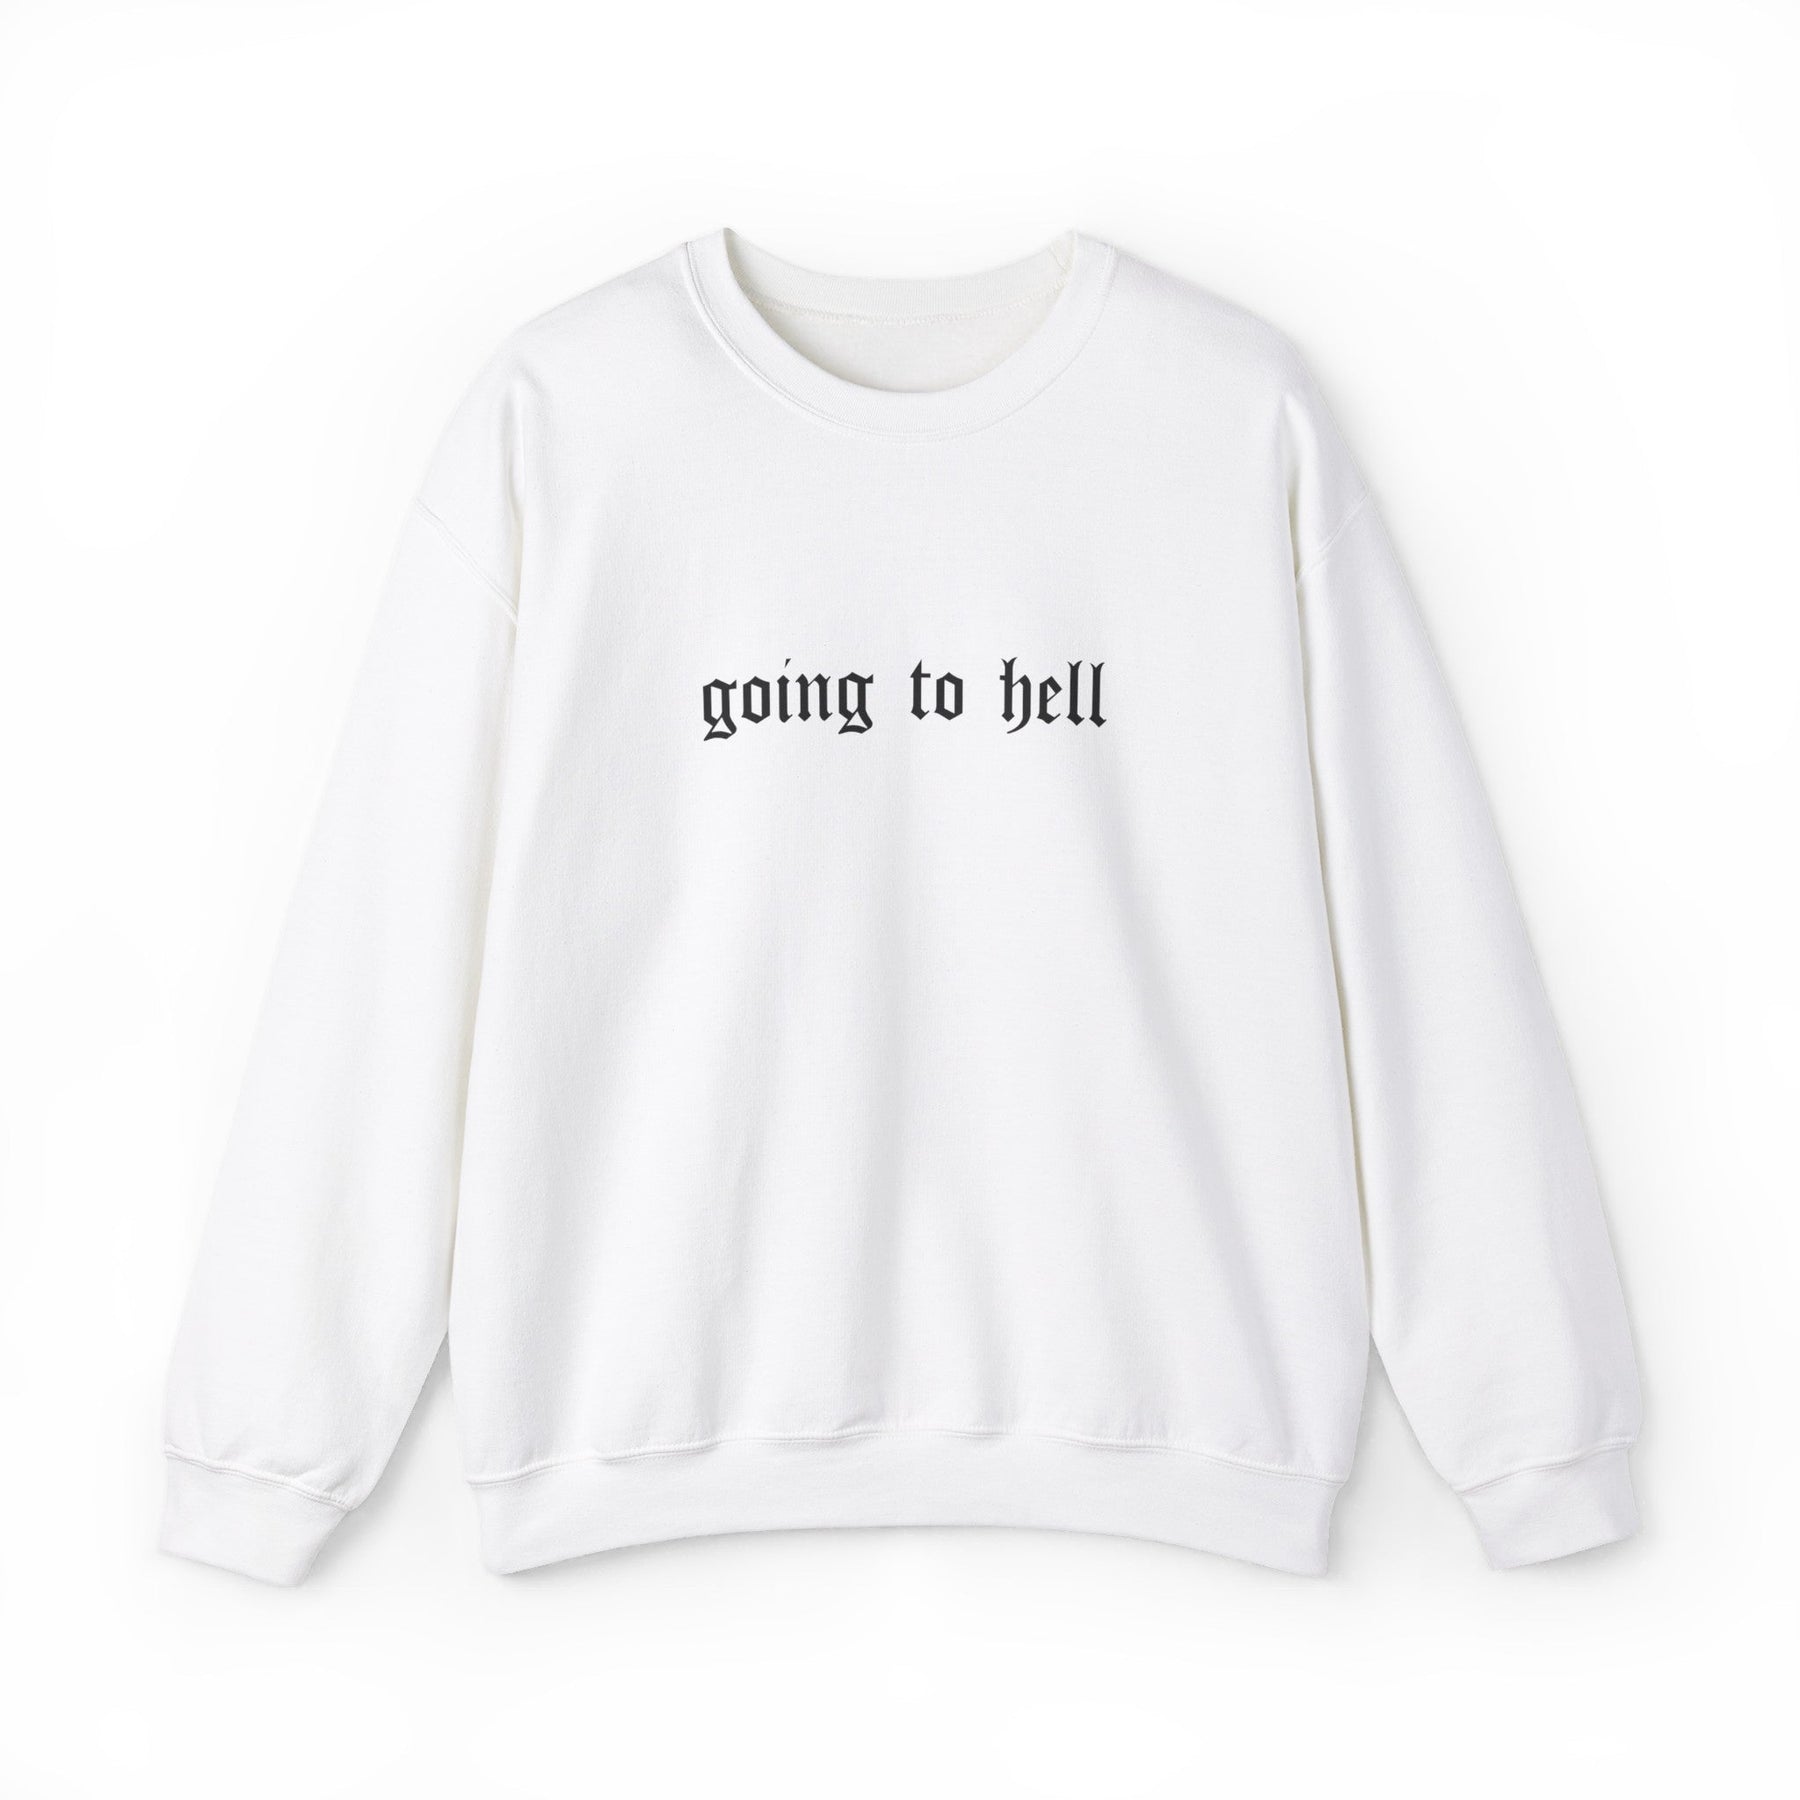 Going to Hell Crewneck Sweatshirt - Goth Cloth Co.Sweatshirt72313115990761537861